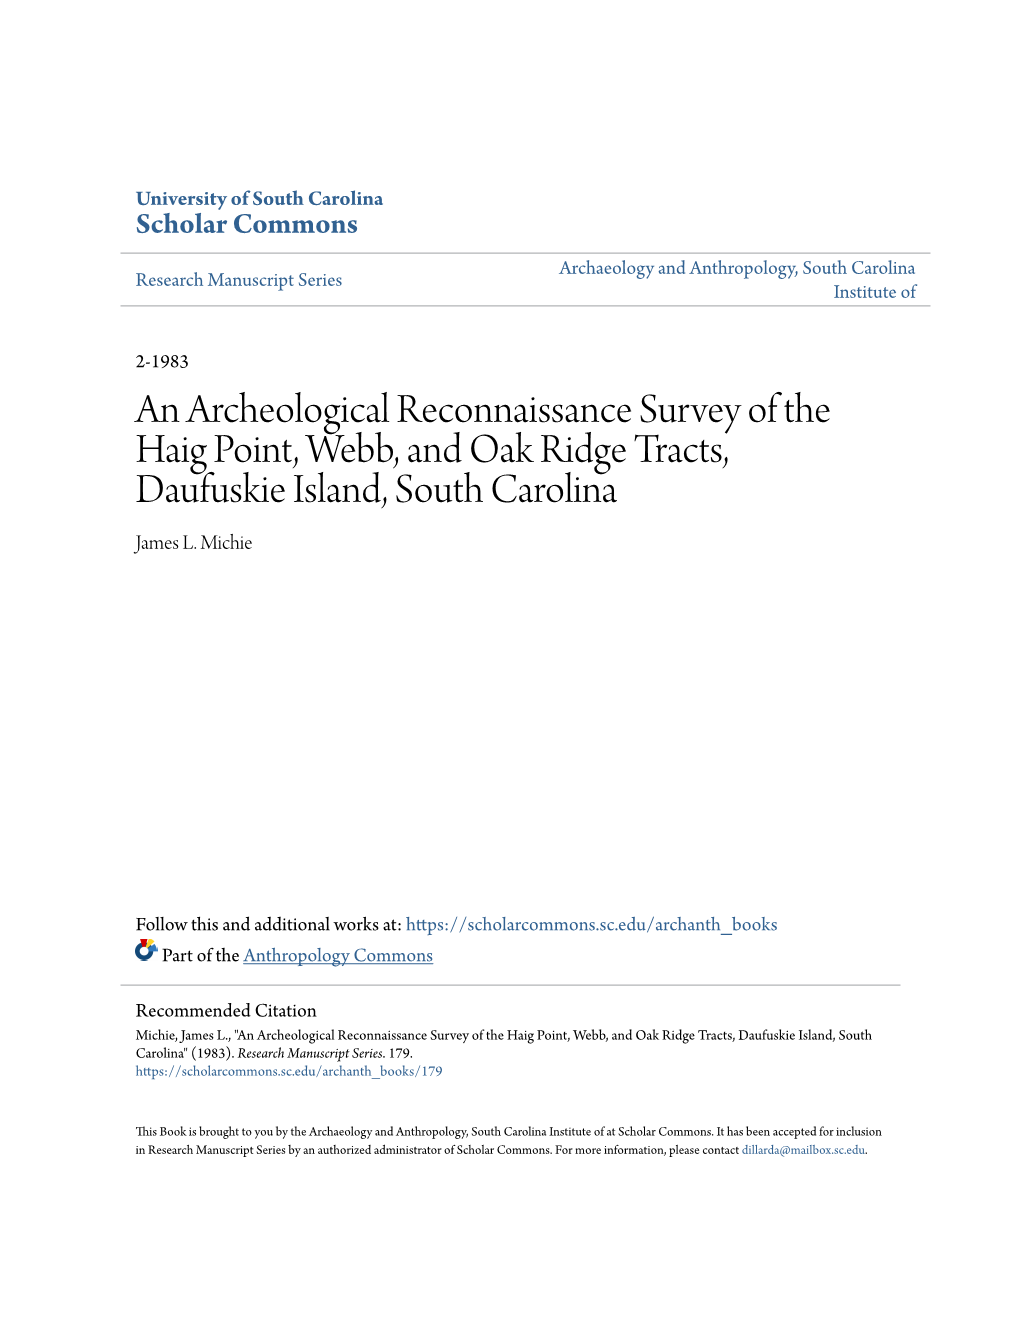 An Archeological Reconnaissance Survey of the Haig Point, Webb, and Oak Ridge Tracts, Daufuskie Island, South Carolina James L